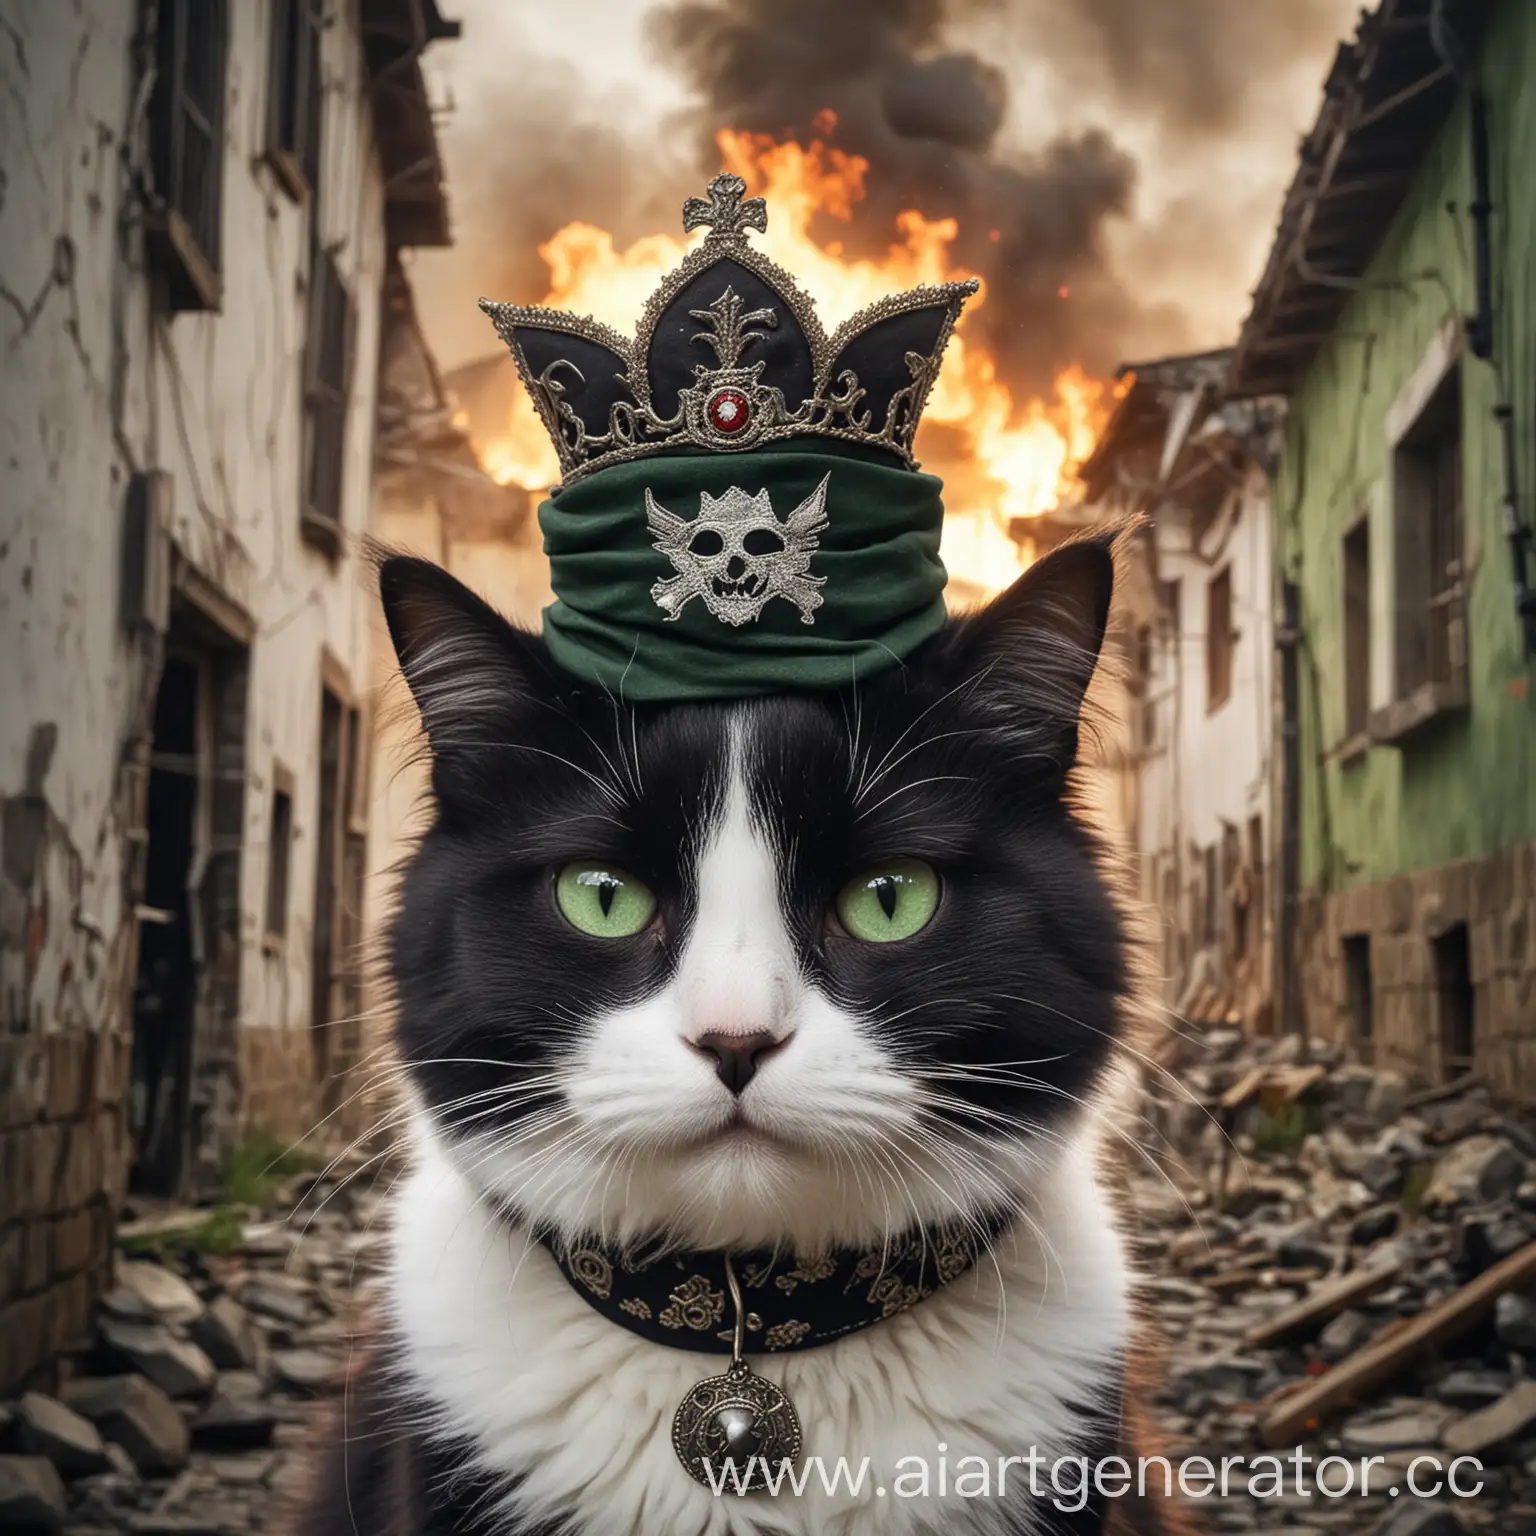 Revolutionary-Cat-of-Bulgaria-Black-and-White-Fluffy-Feline-with-Green-Eyes